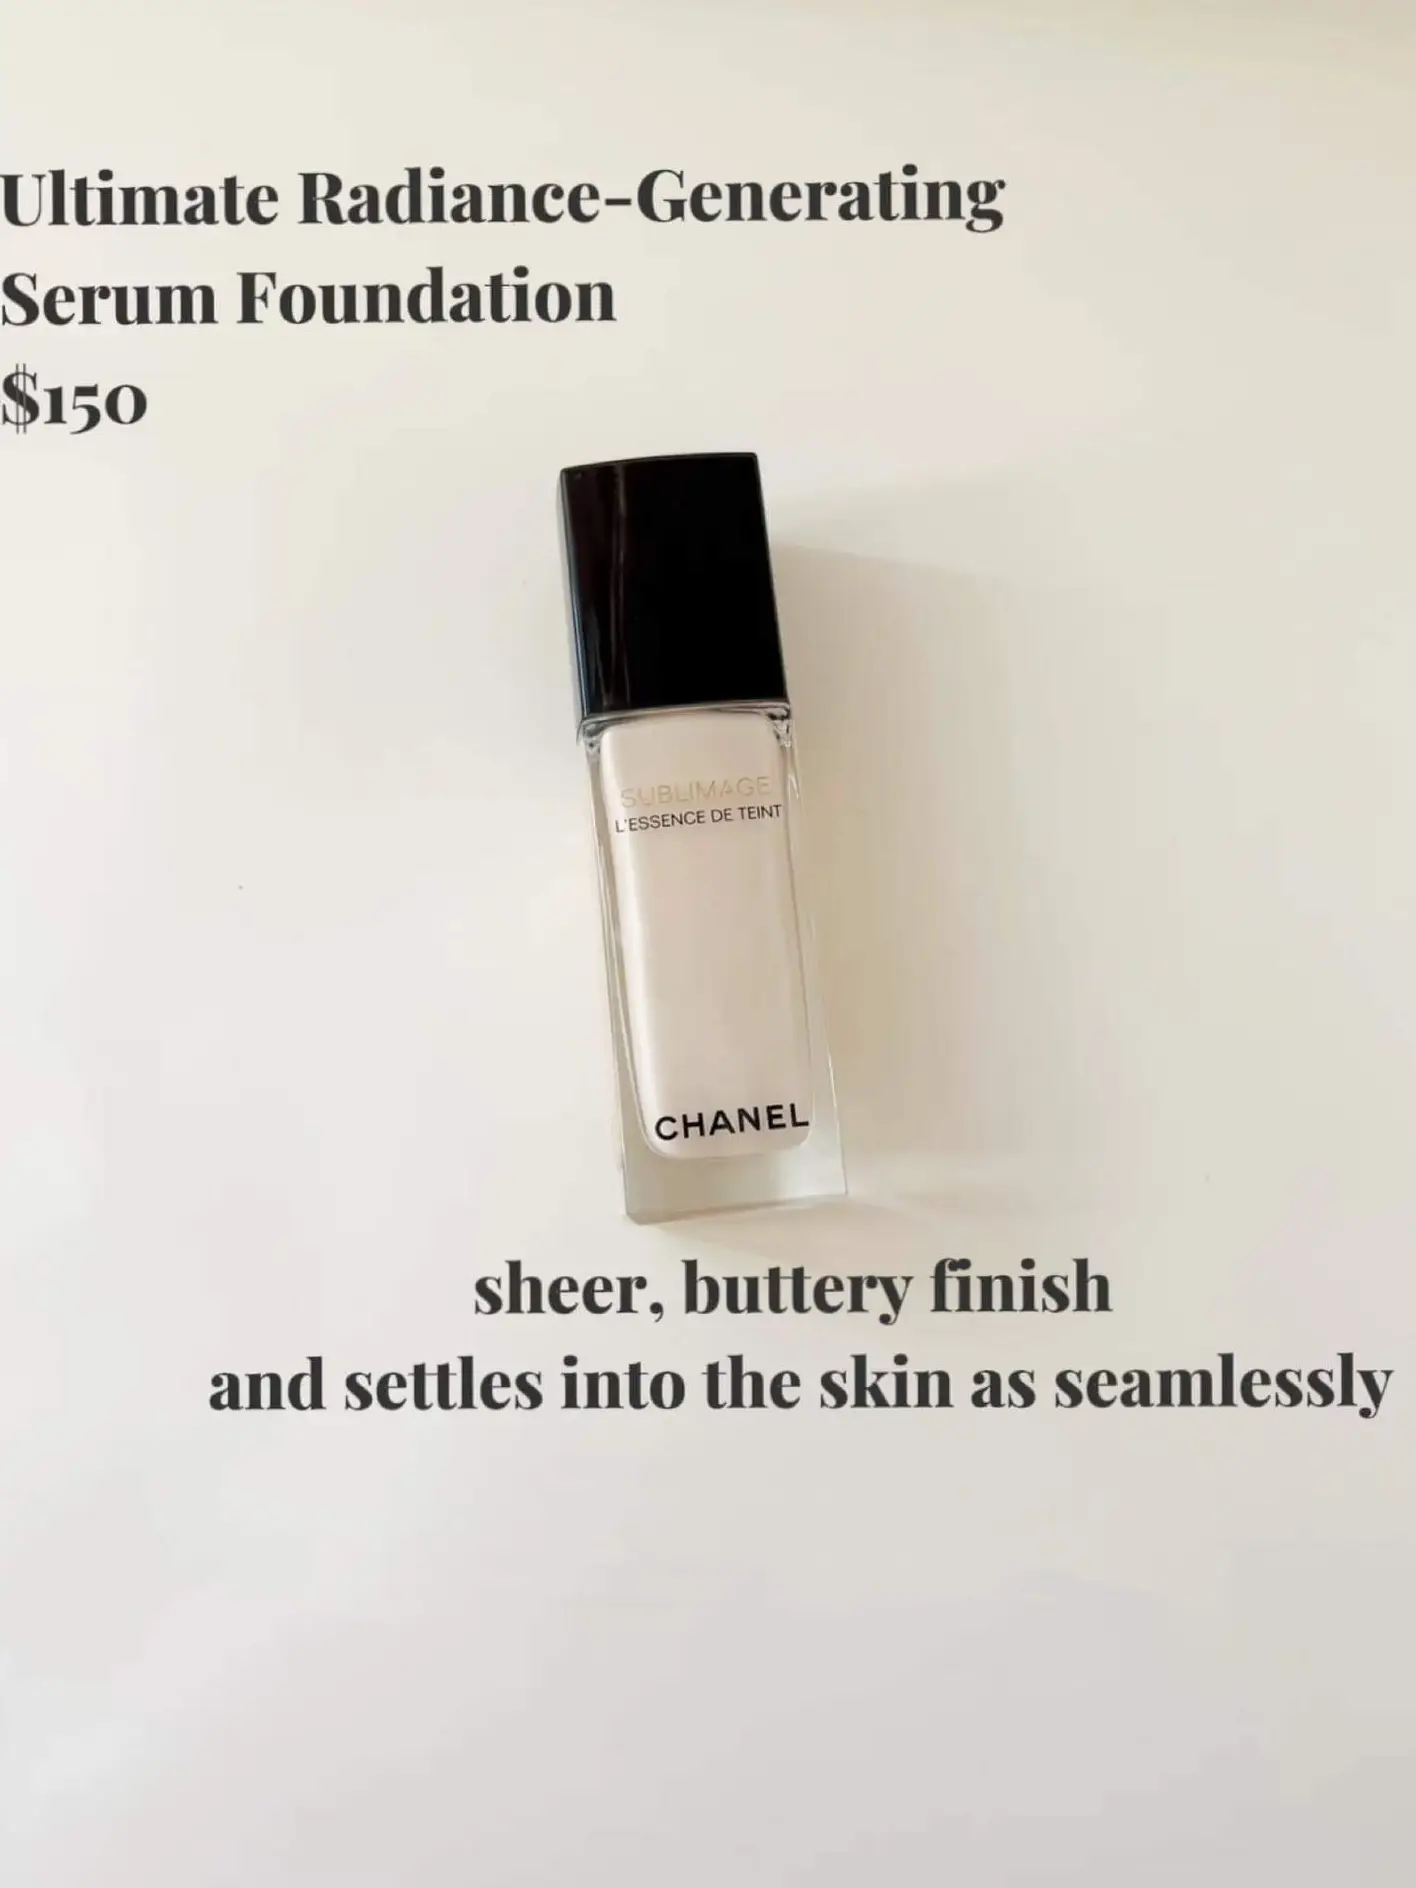 Chanel Ultimate Radiance-generating Serum Foundation